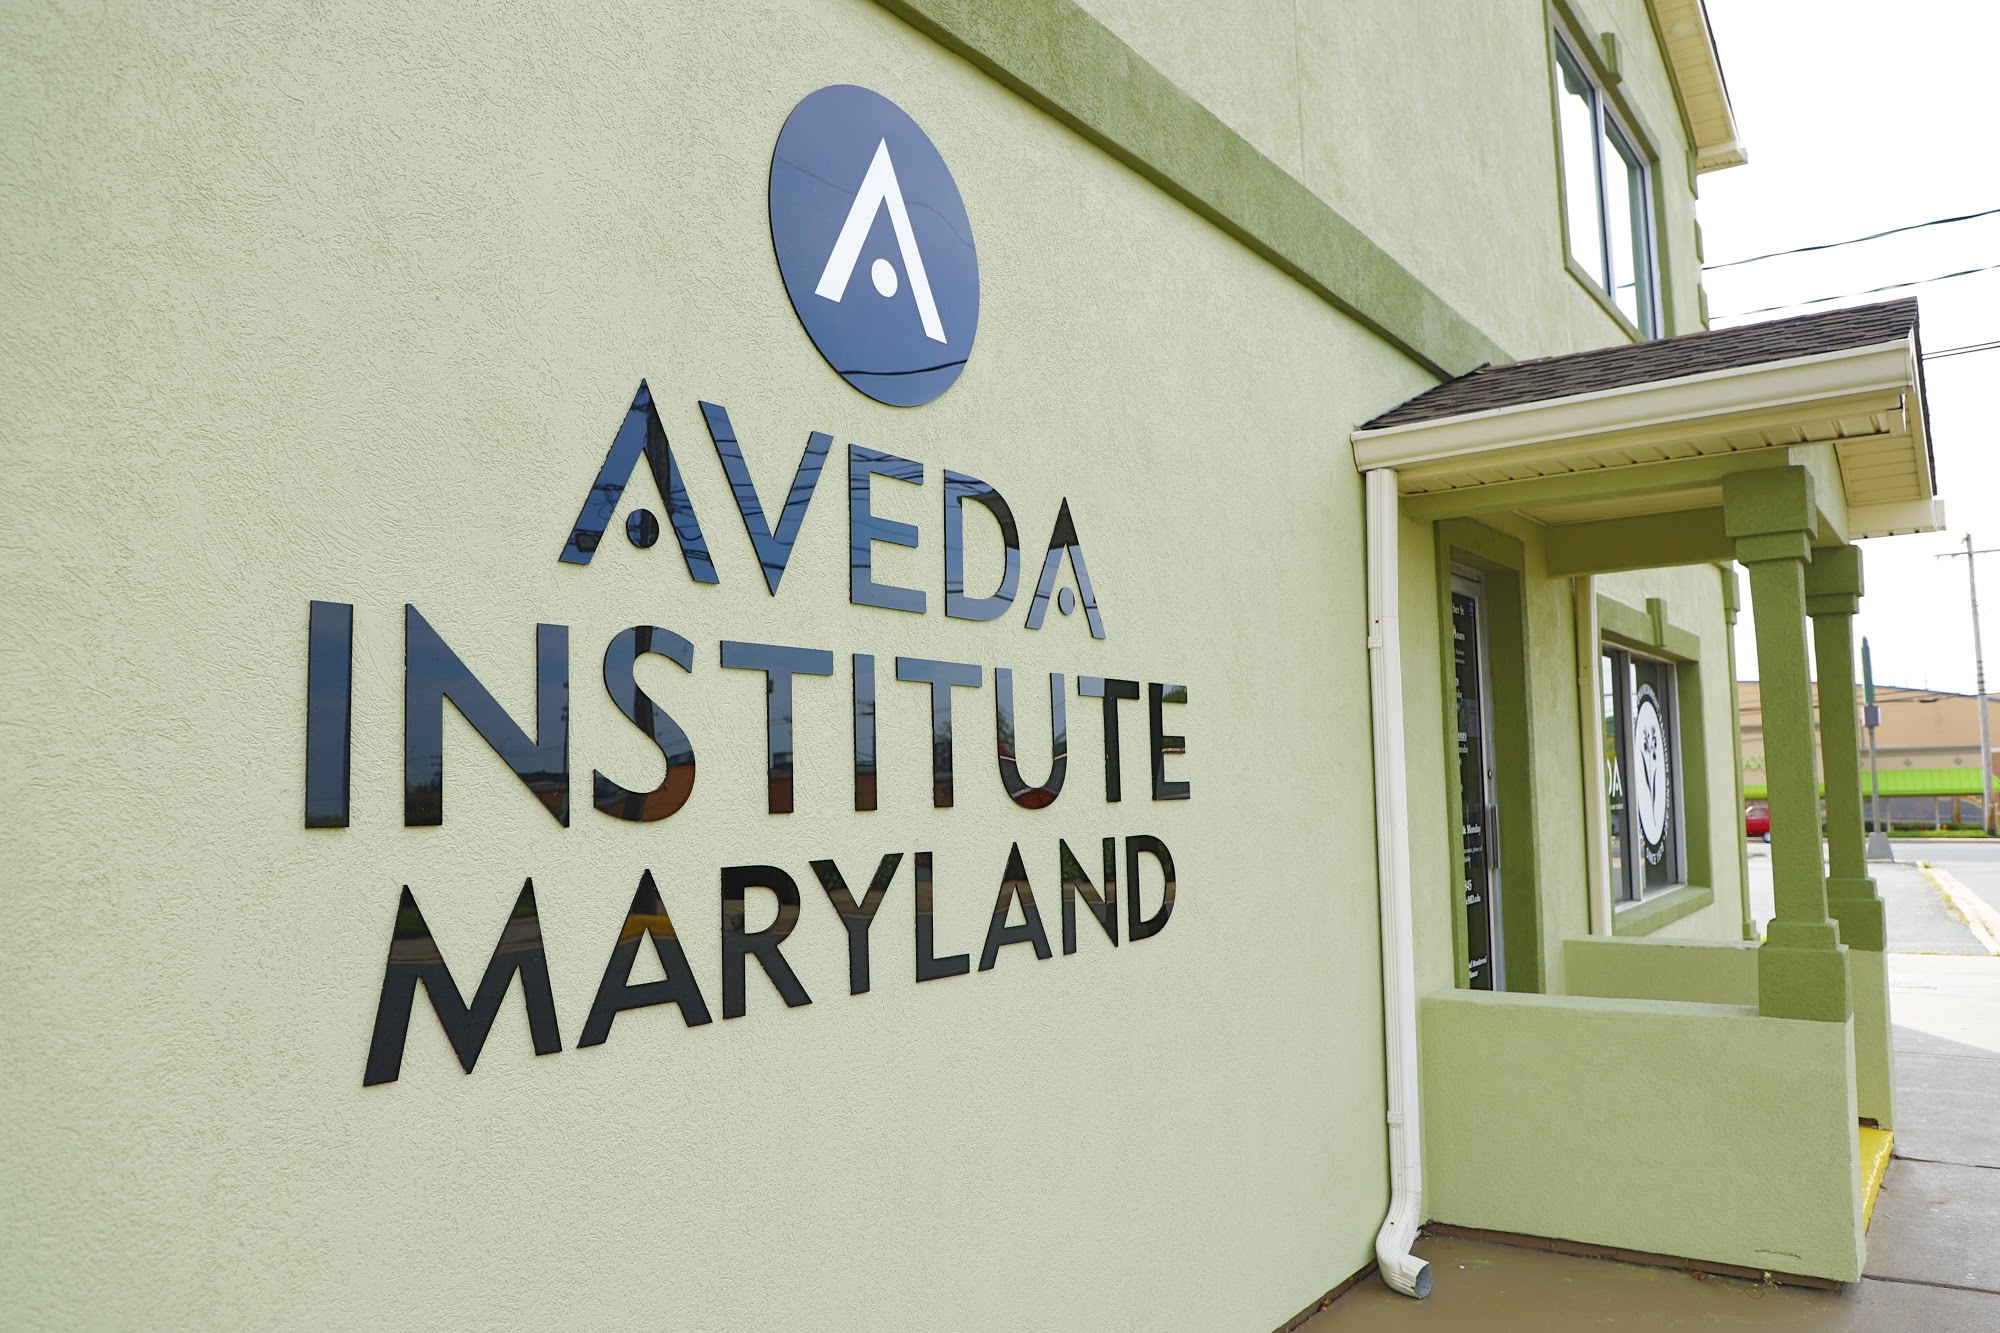 Aveda Institute Maryland